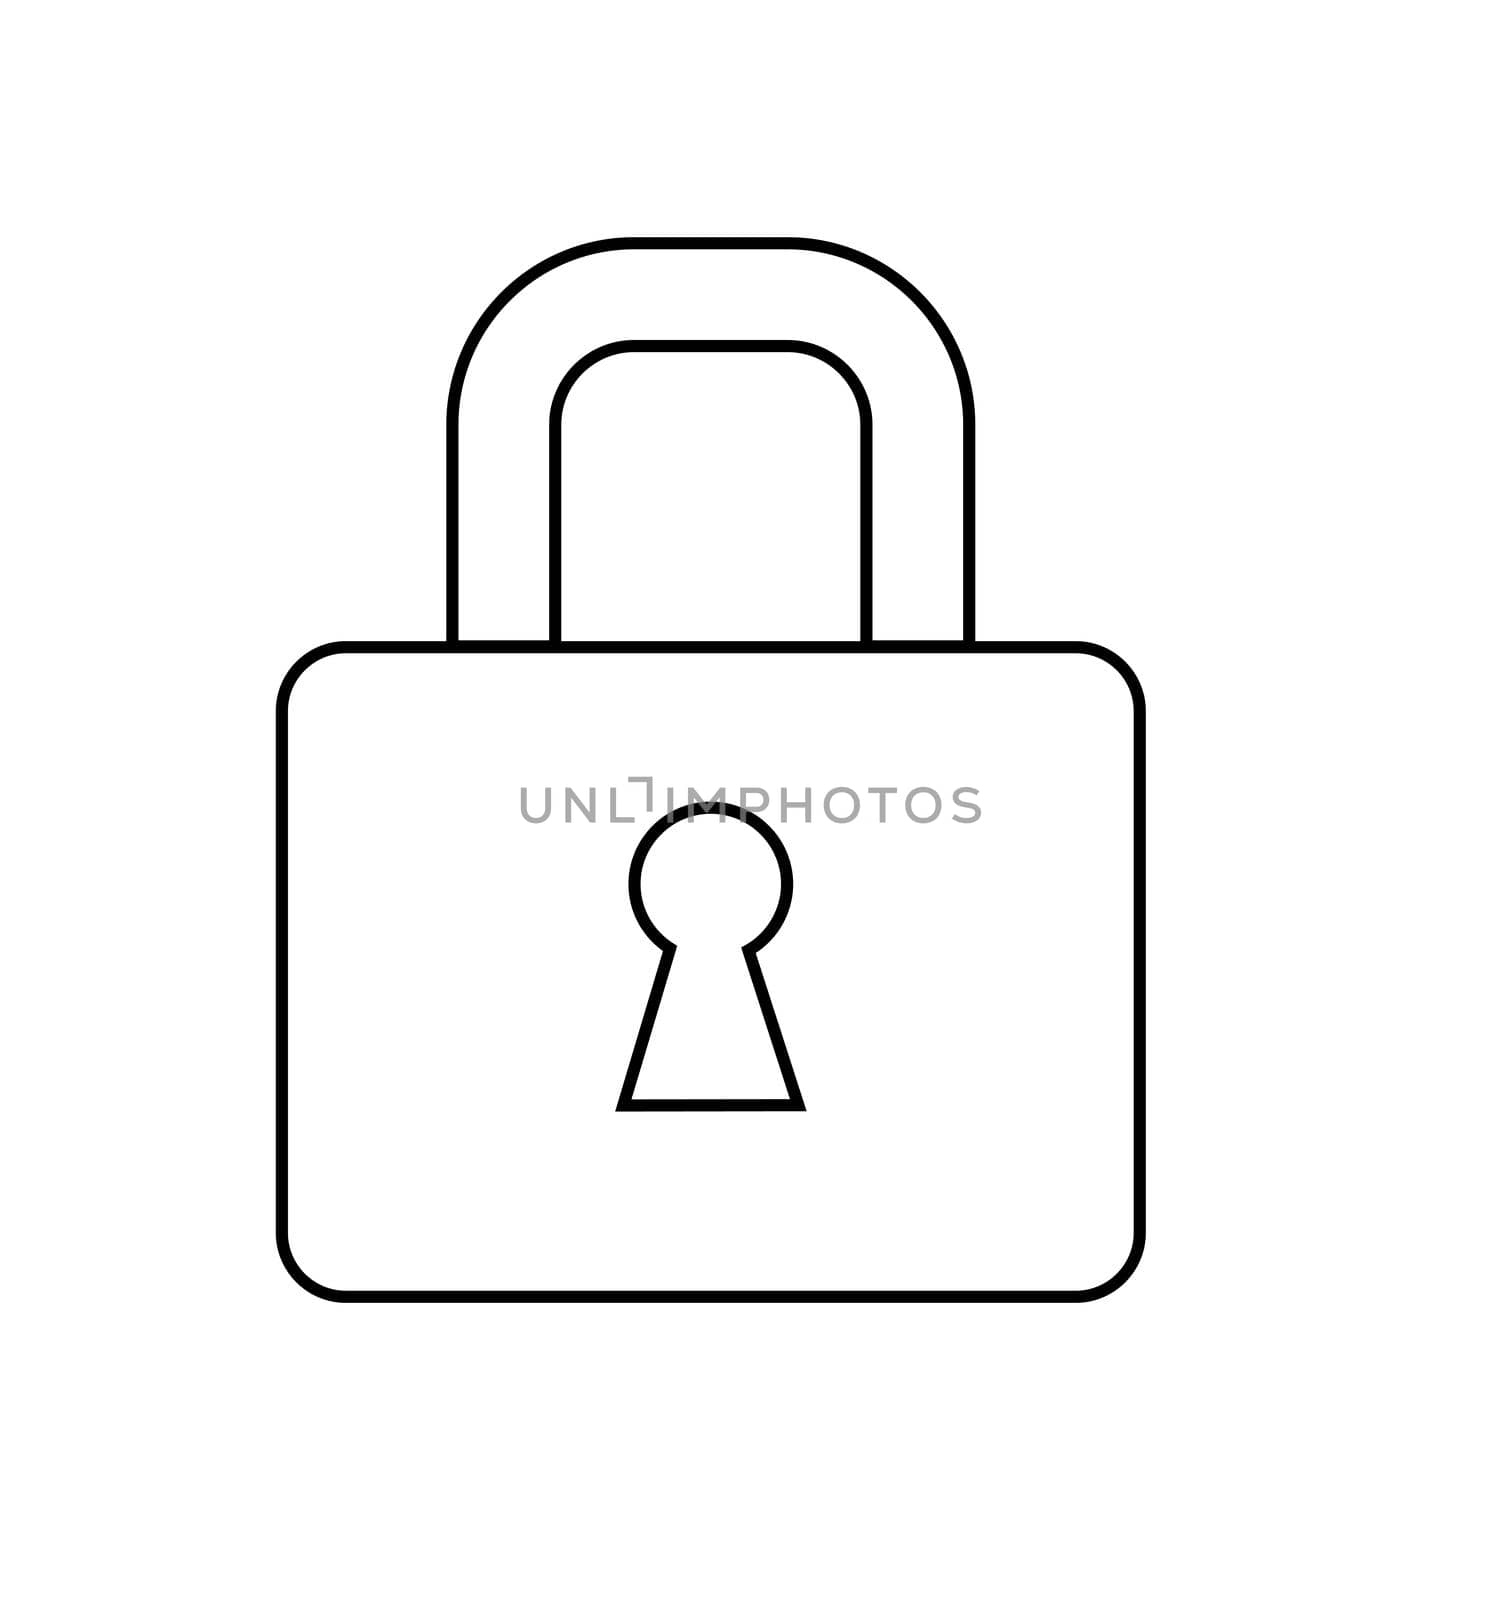 Lock icon protection line symbol flat style isolated on white background.